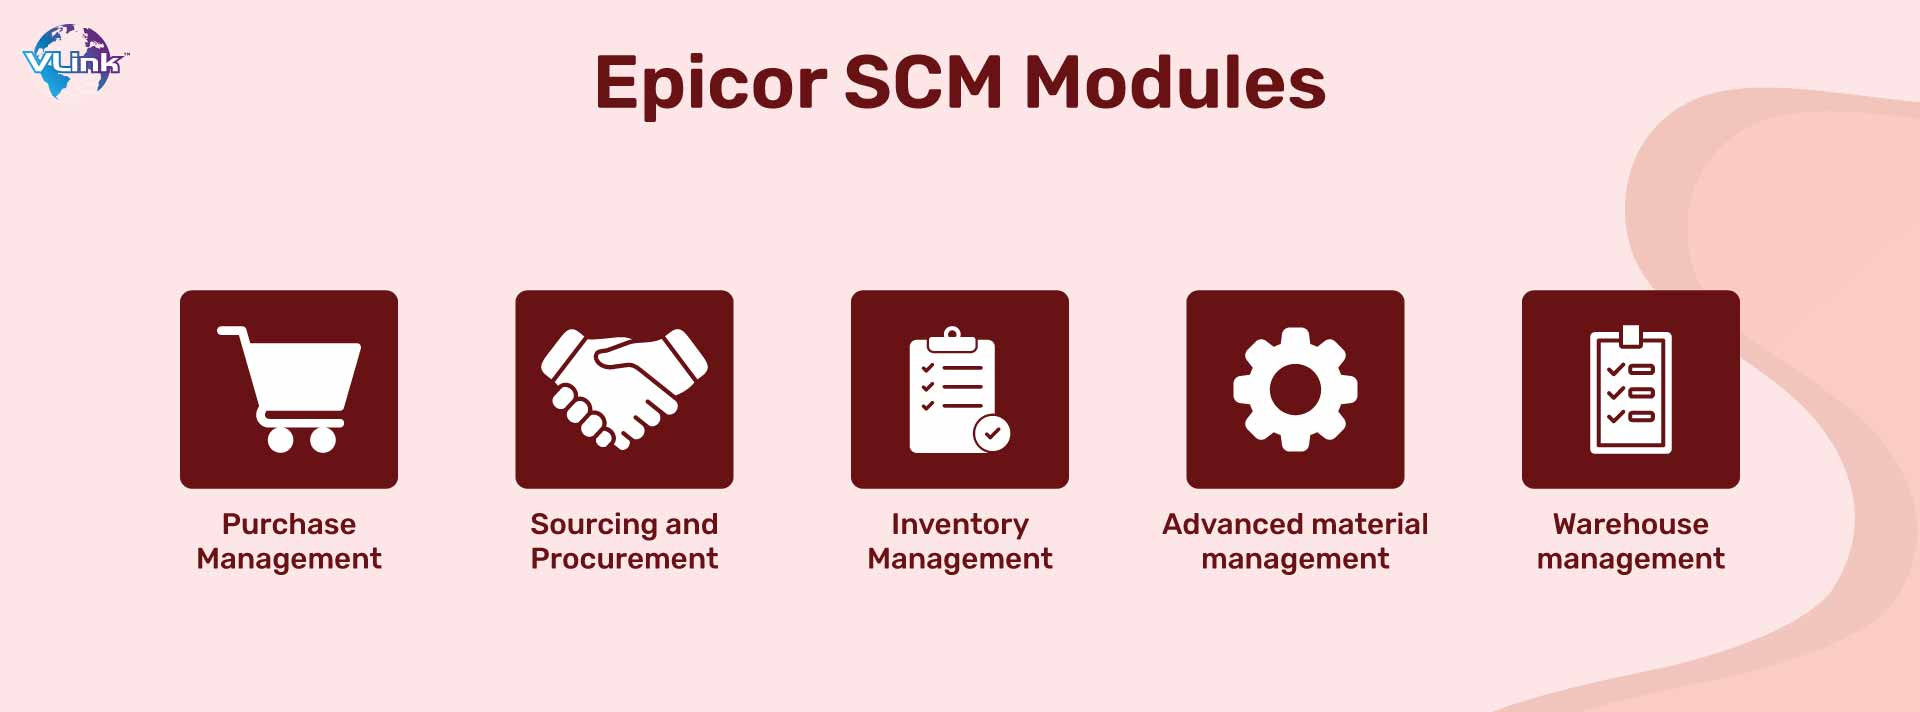 Epicor SCM Modules